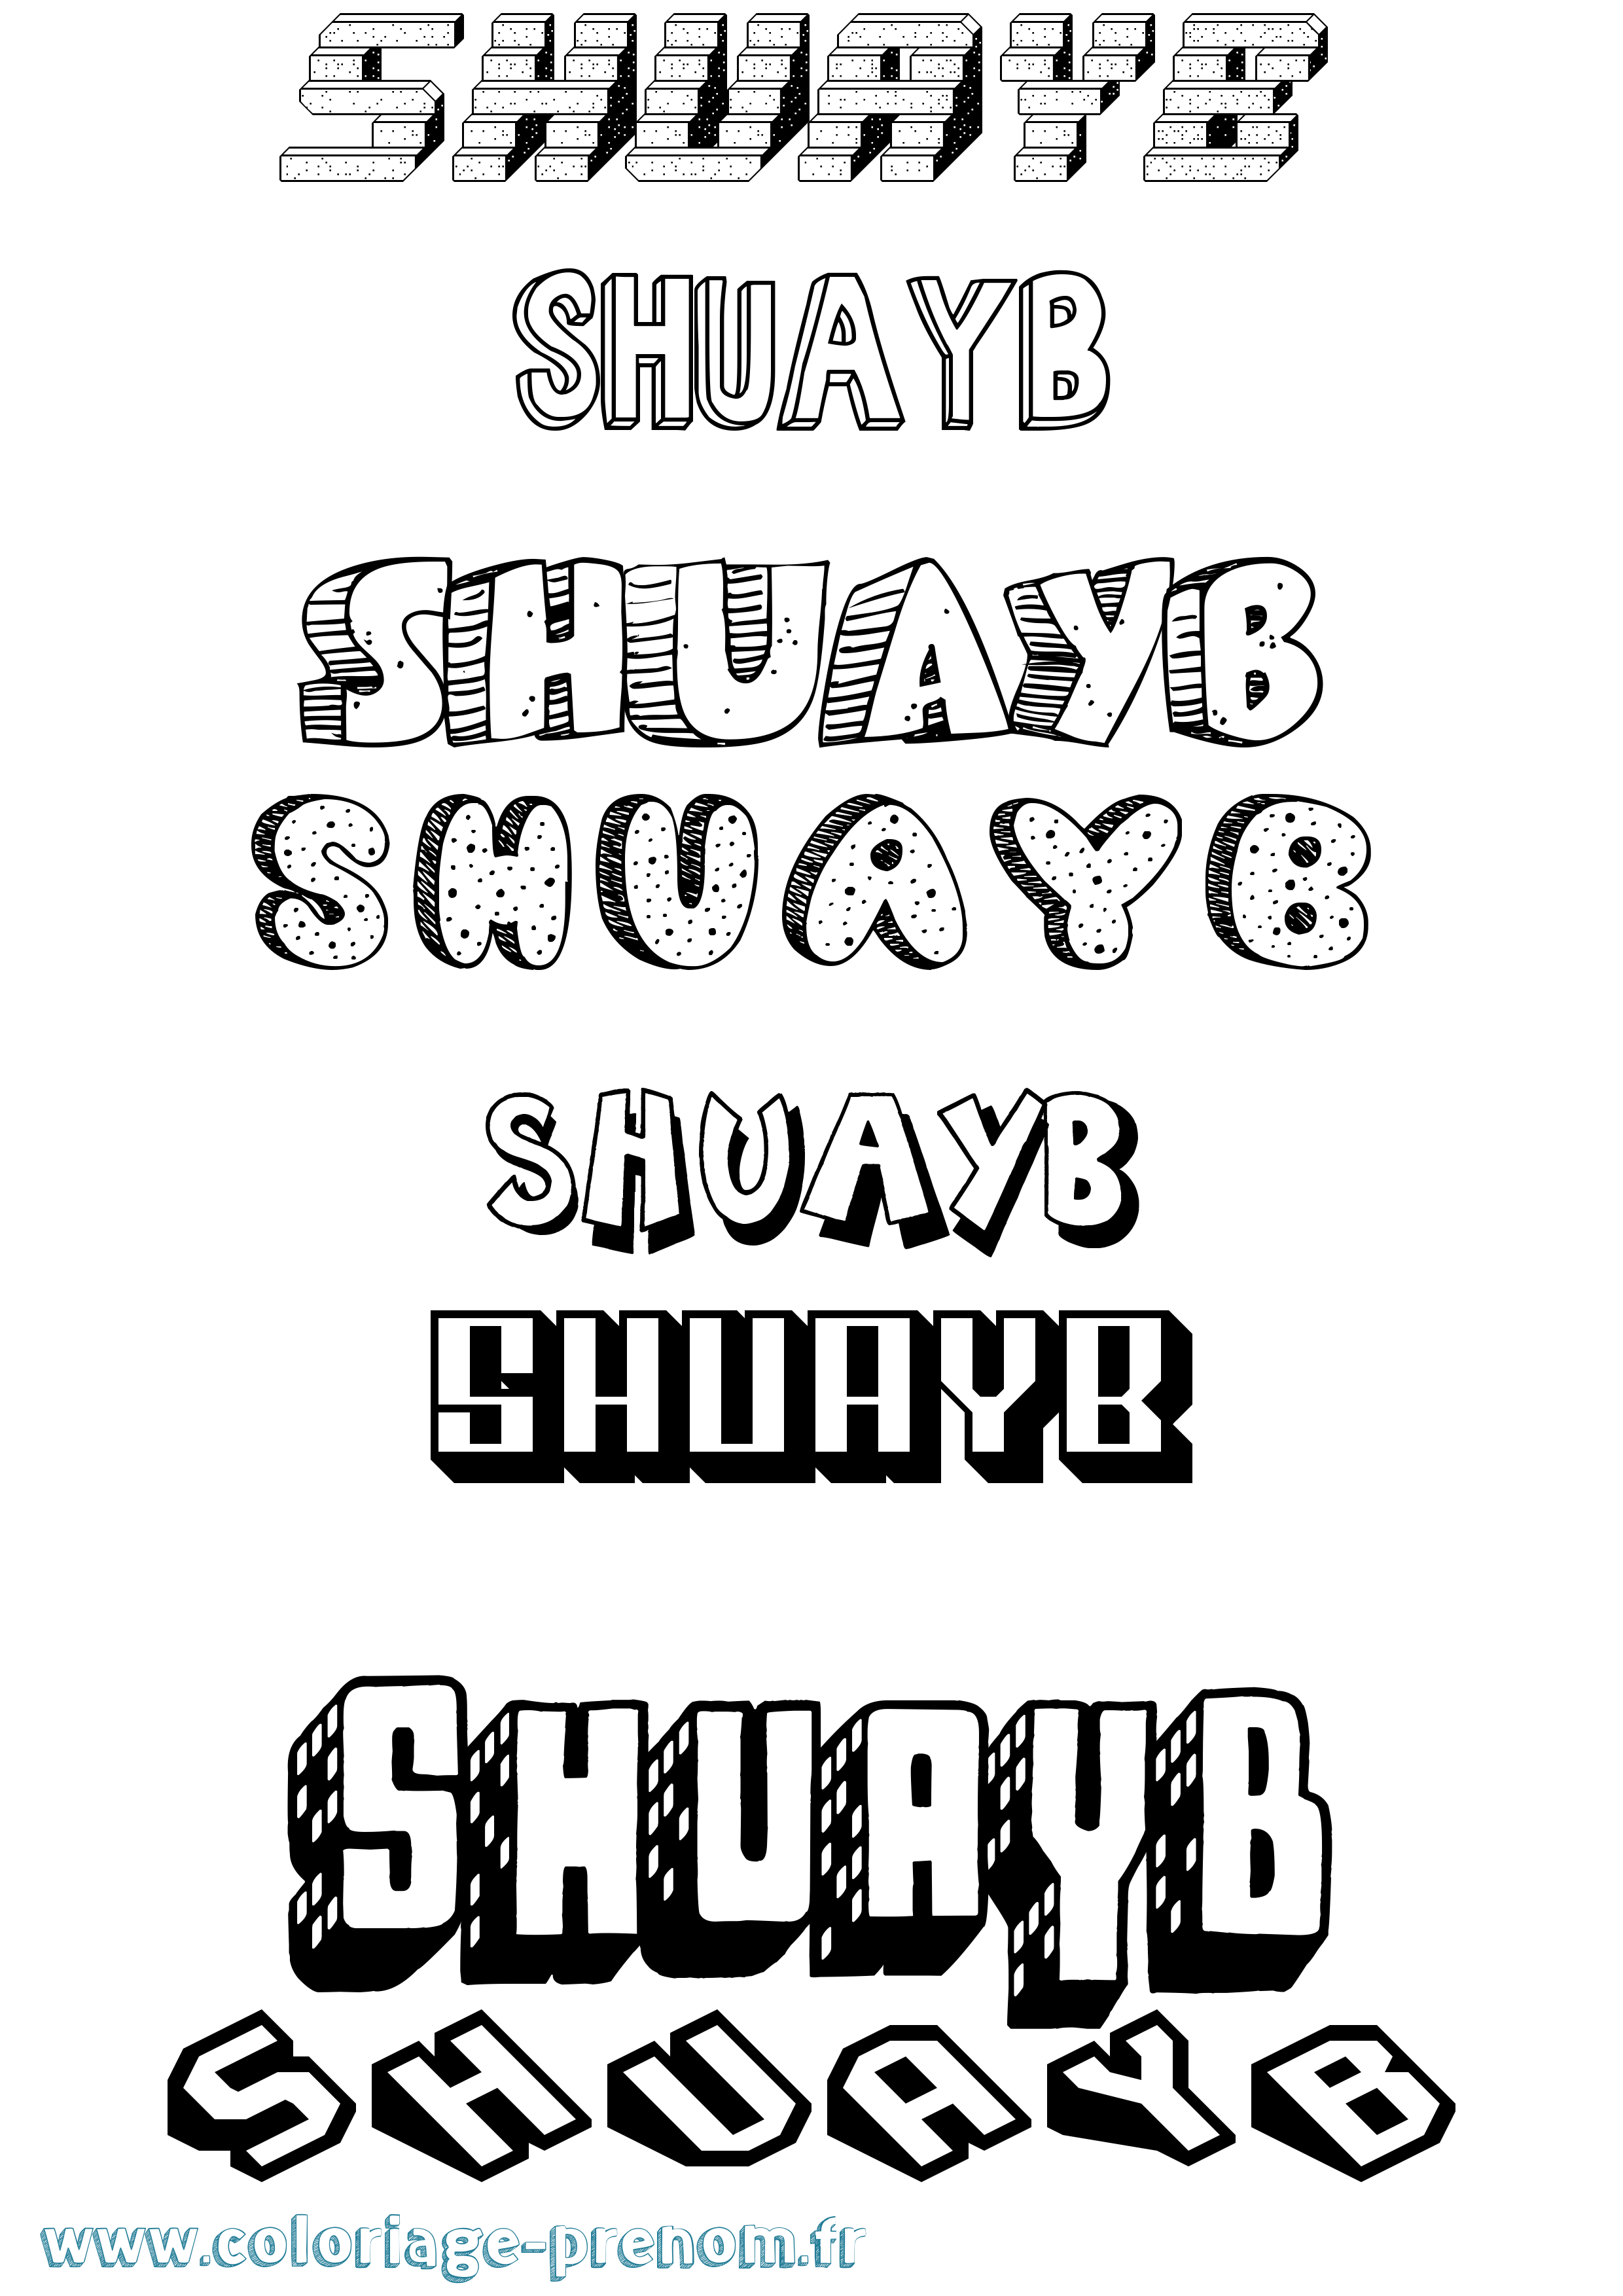 Coloriage prénom Shuayb Effet 3D